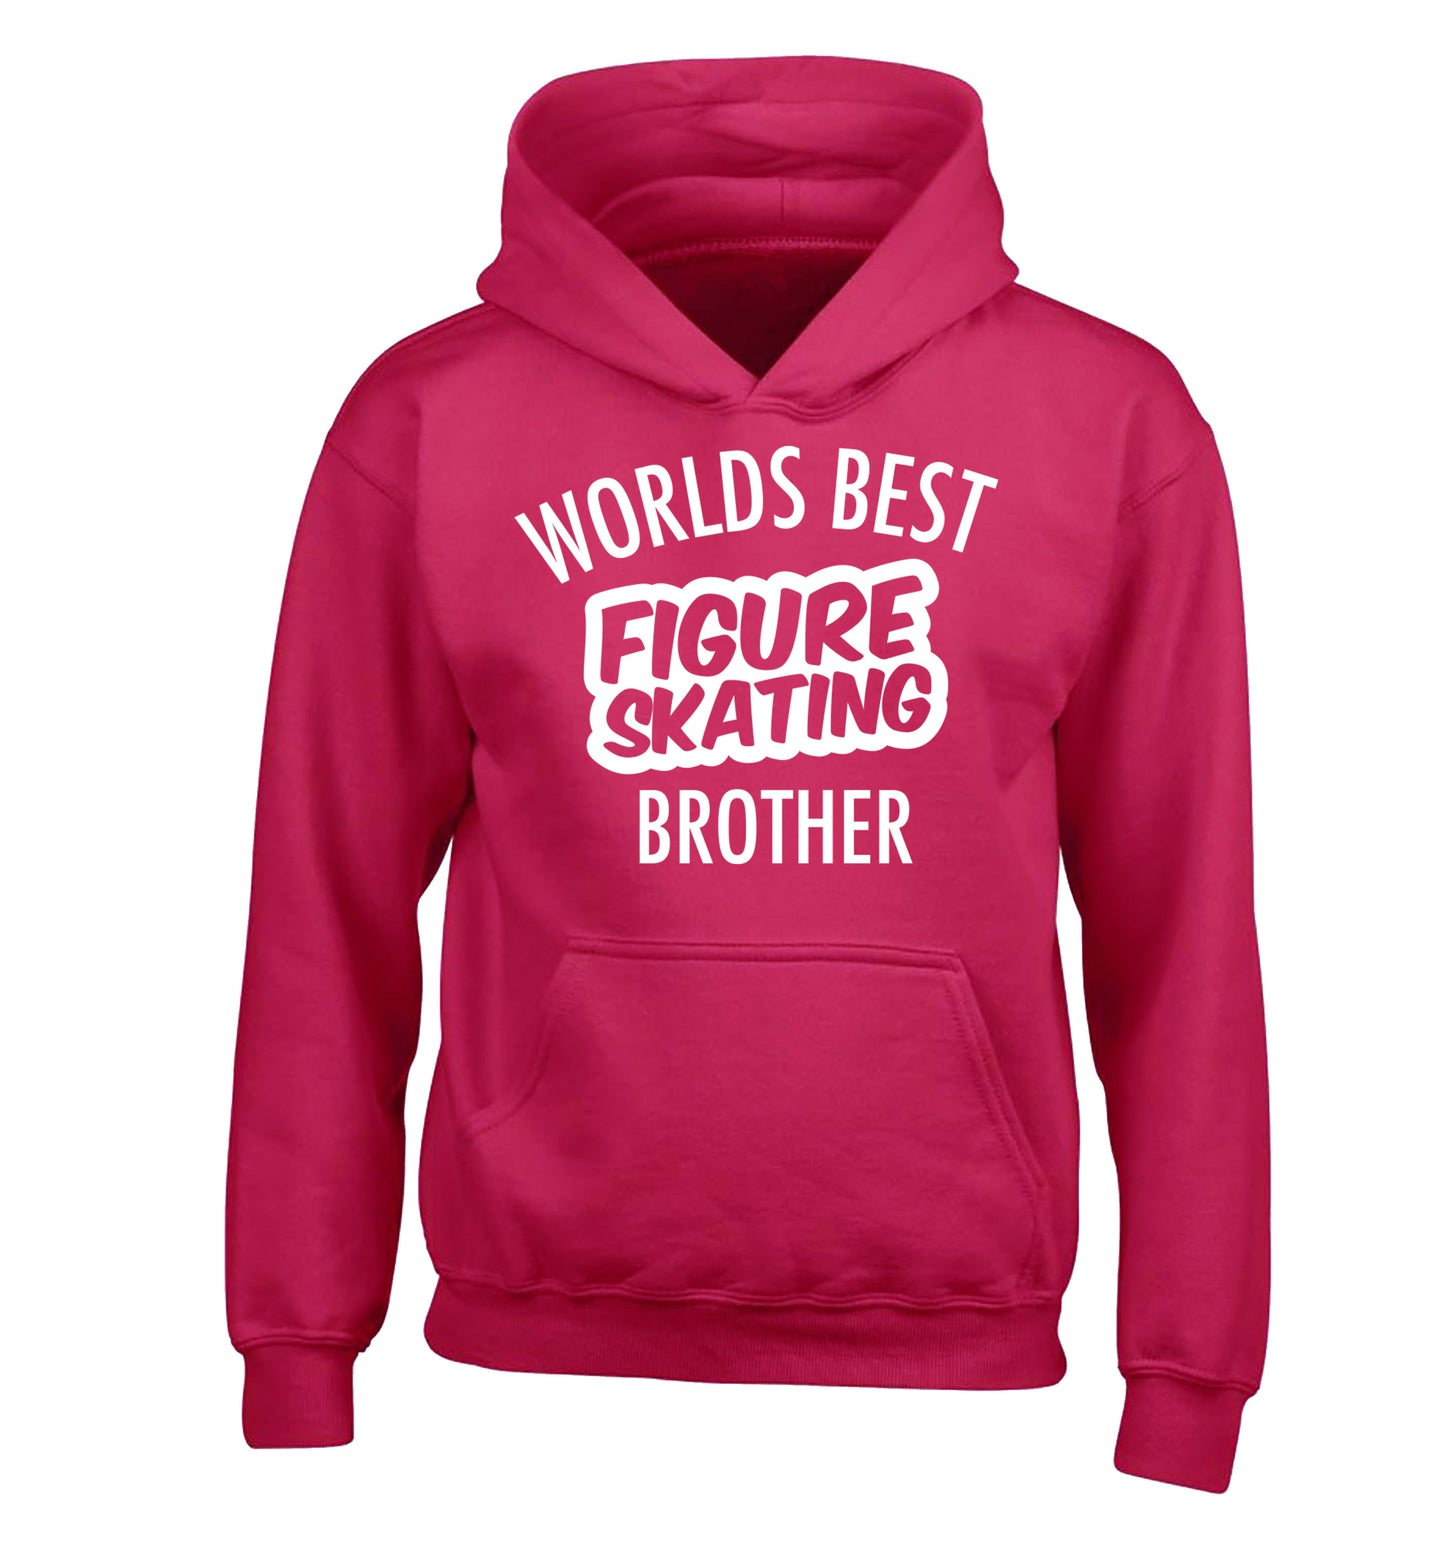 Worlds best figure skating brother children's pink hoodie 12-14 Years